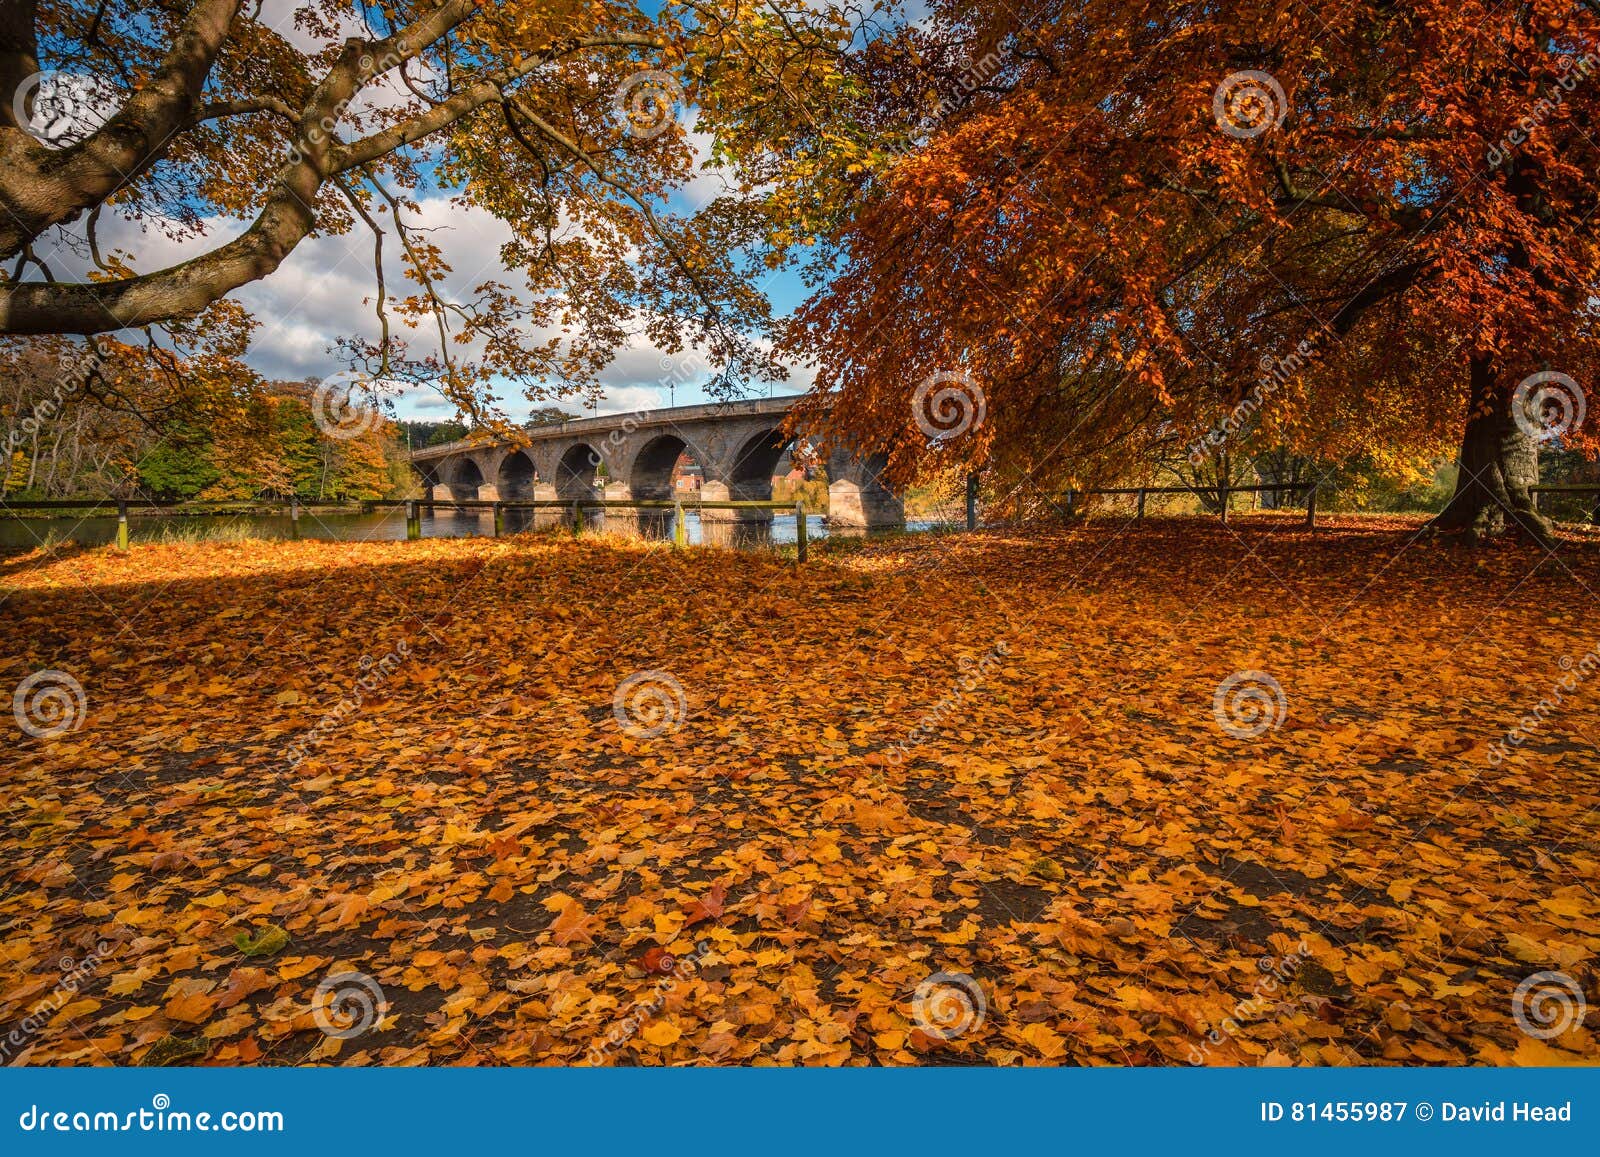 autumn leaves and hexham bridge